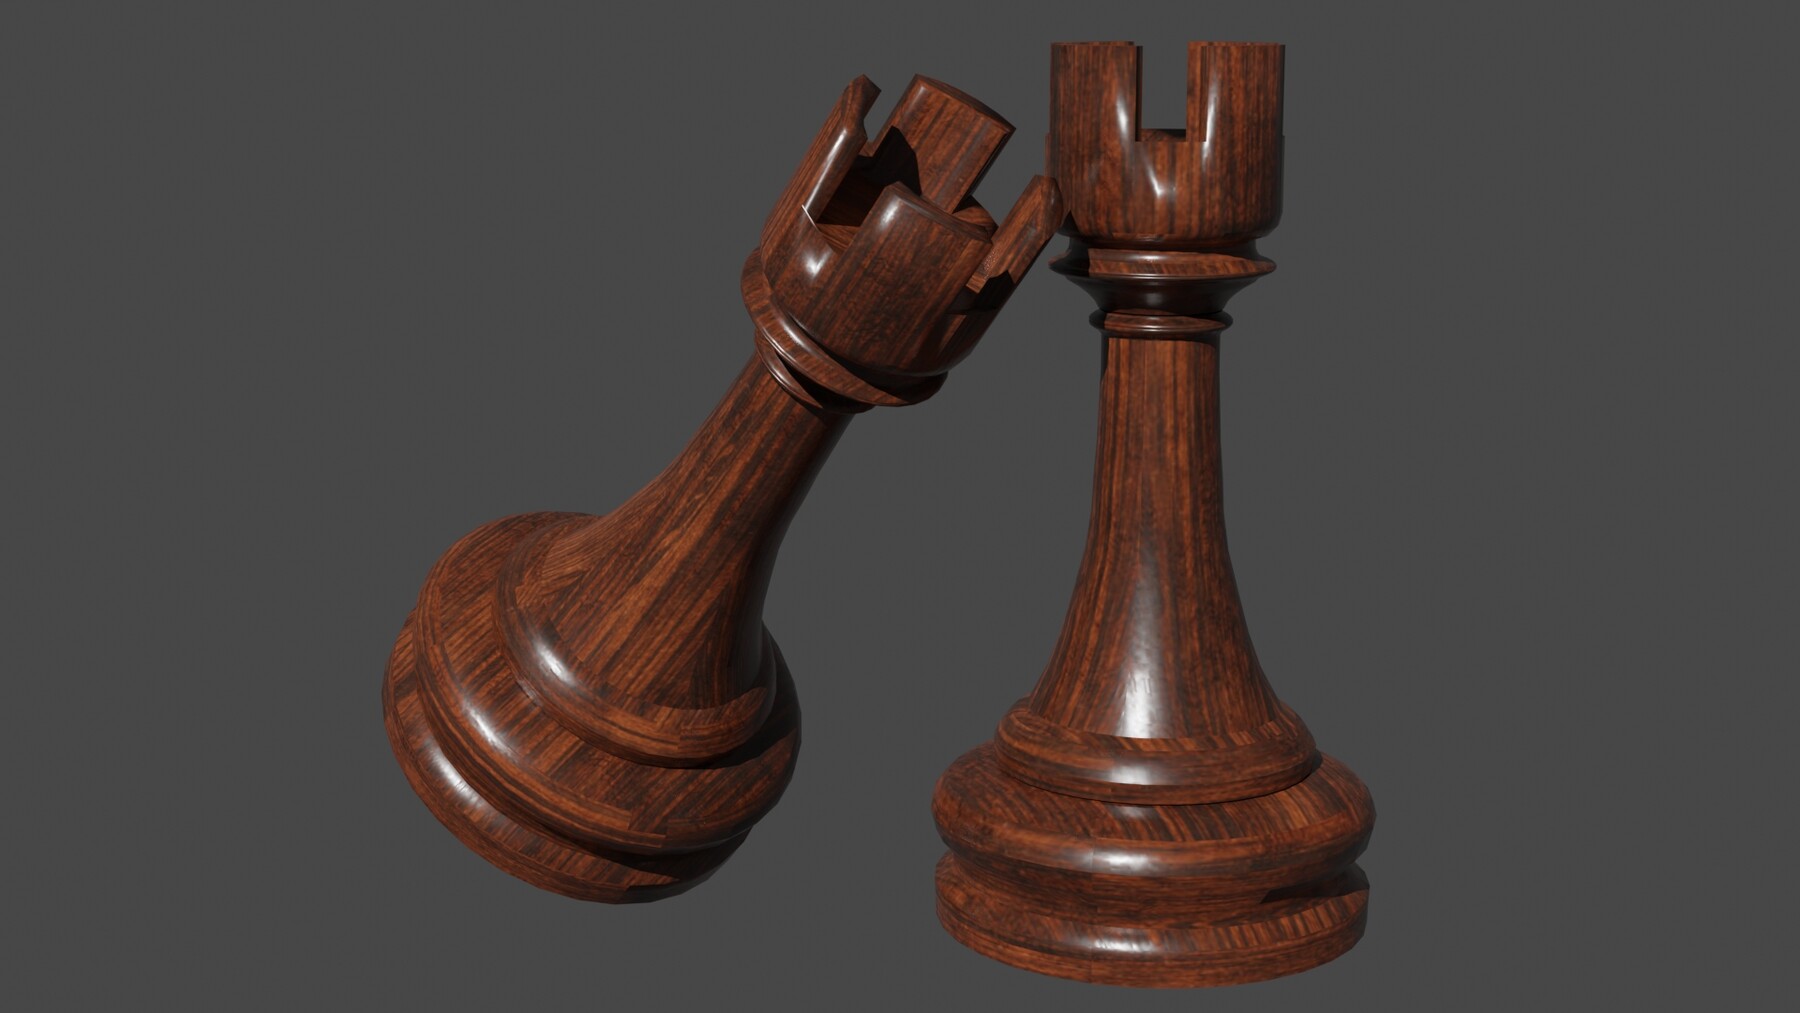 Rook Chess Set Design : r/DesignPorn